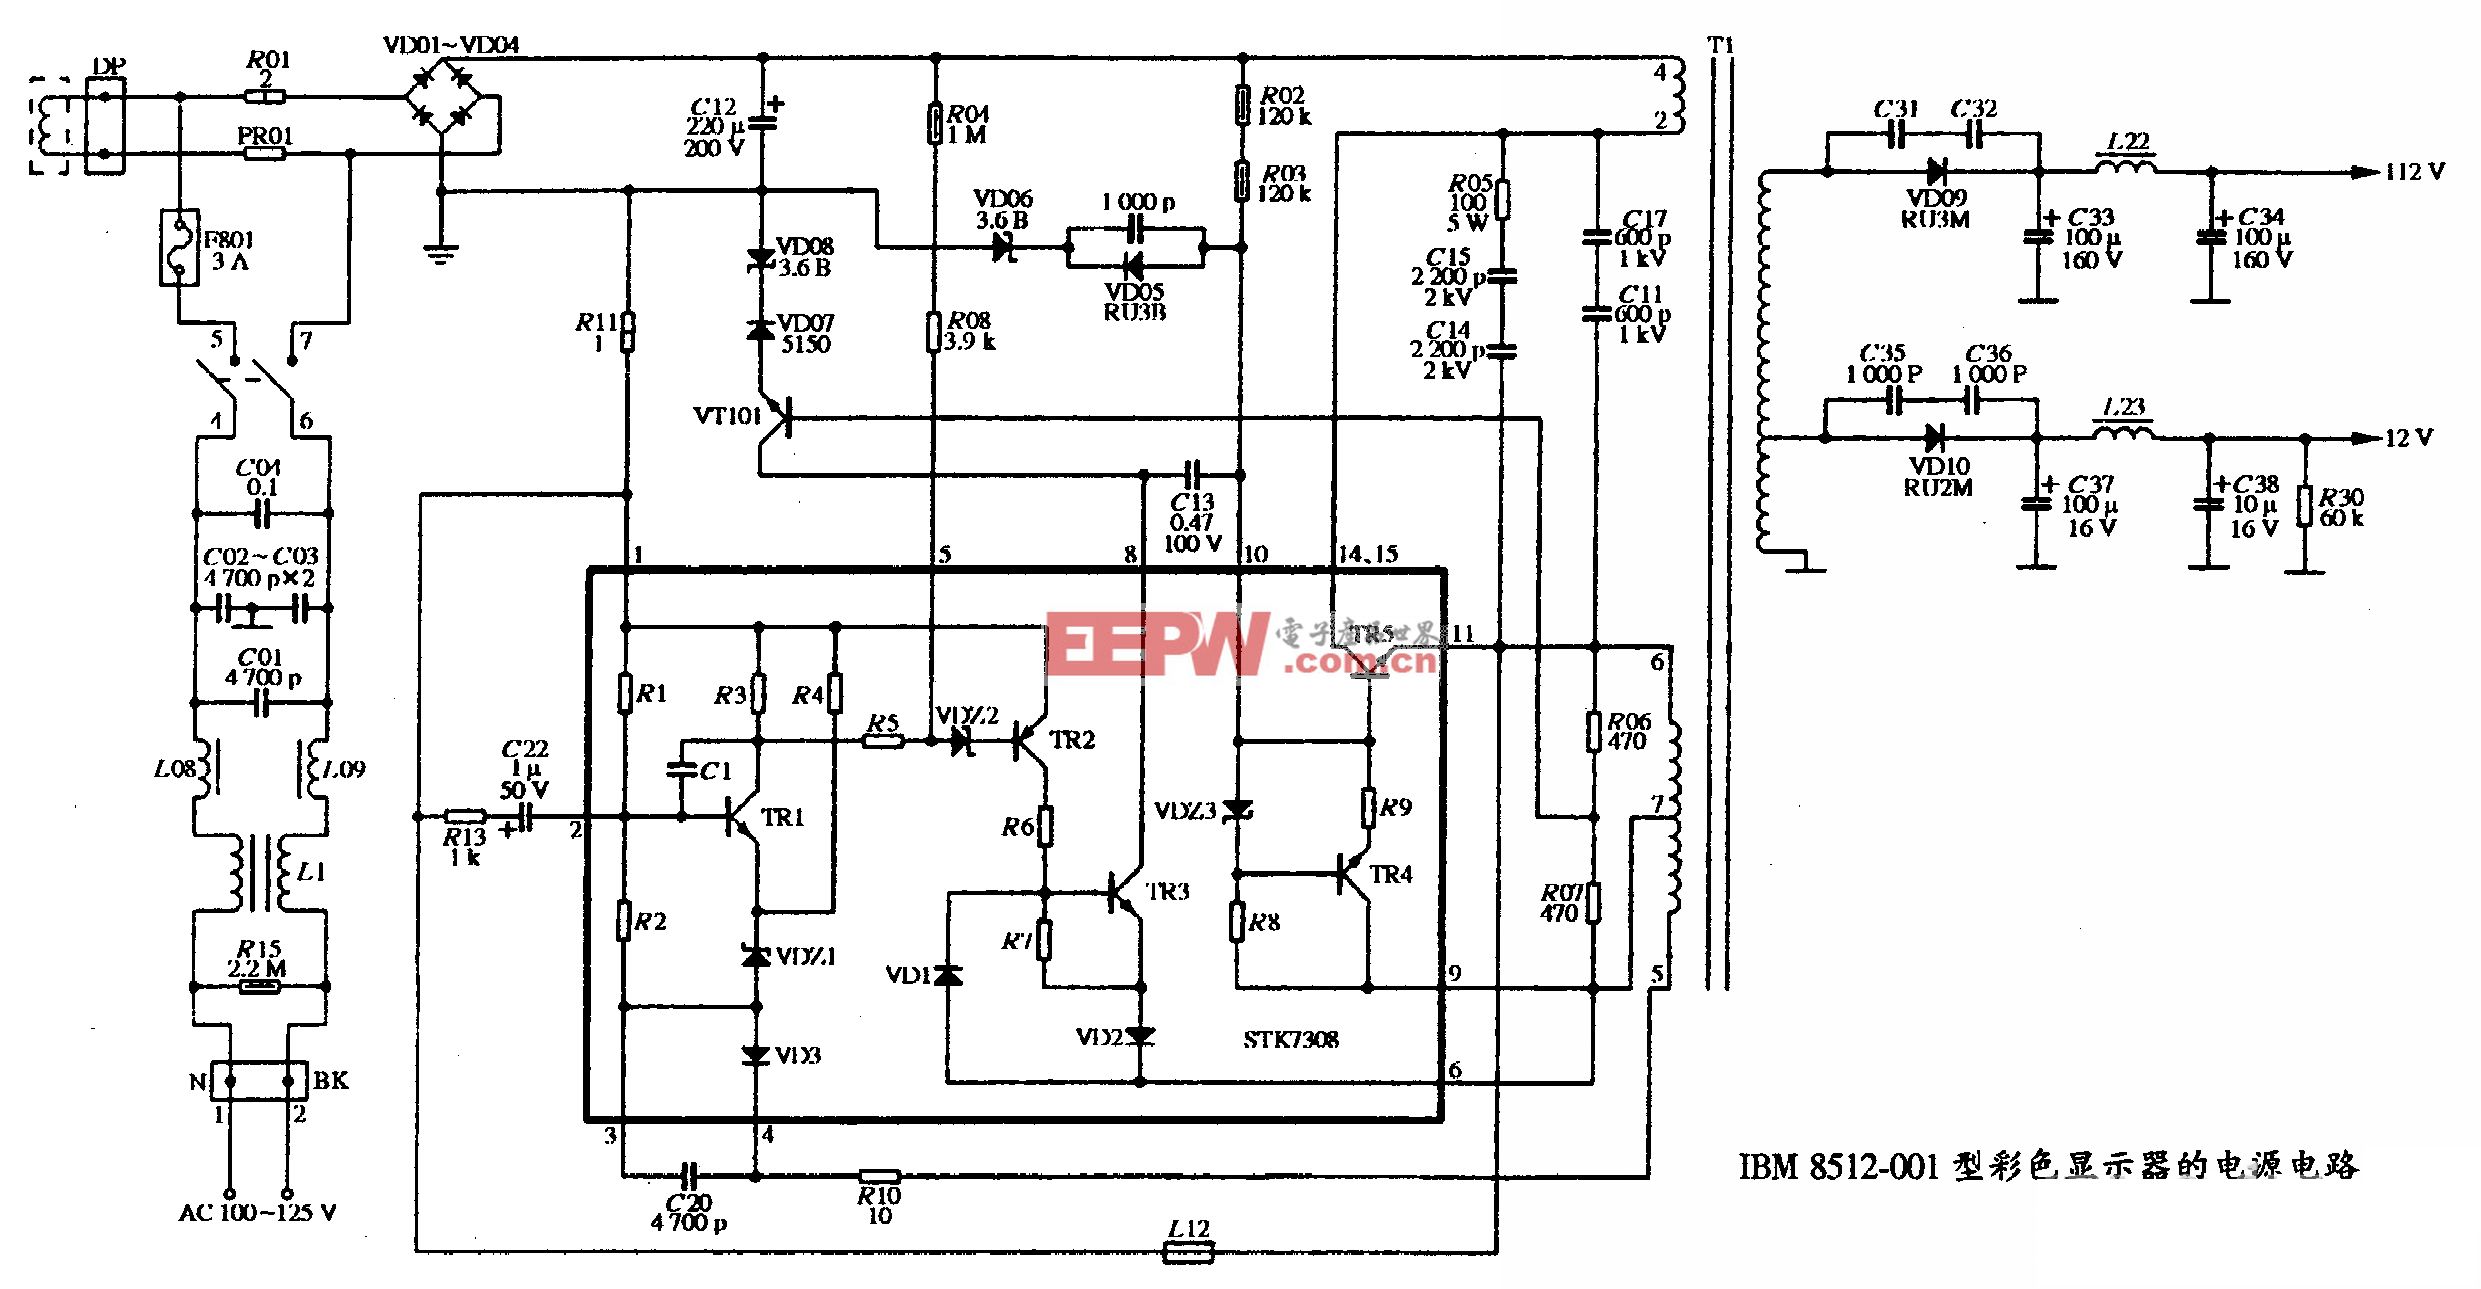 IBM 8512-001型彩色显示器的电源电路图